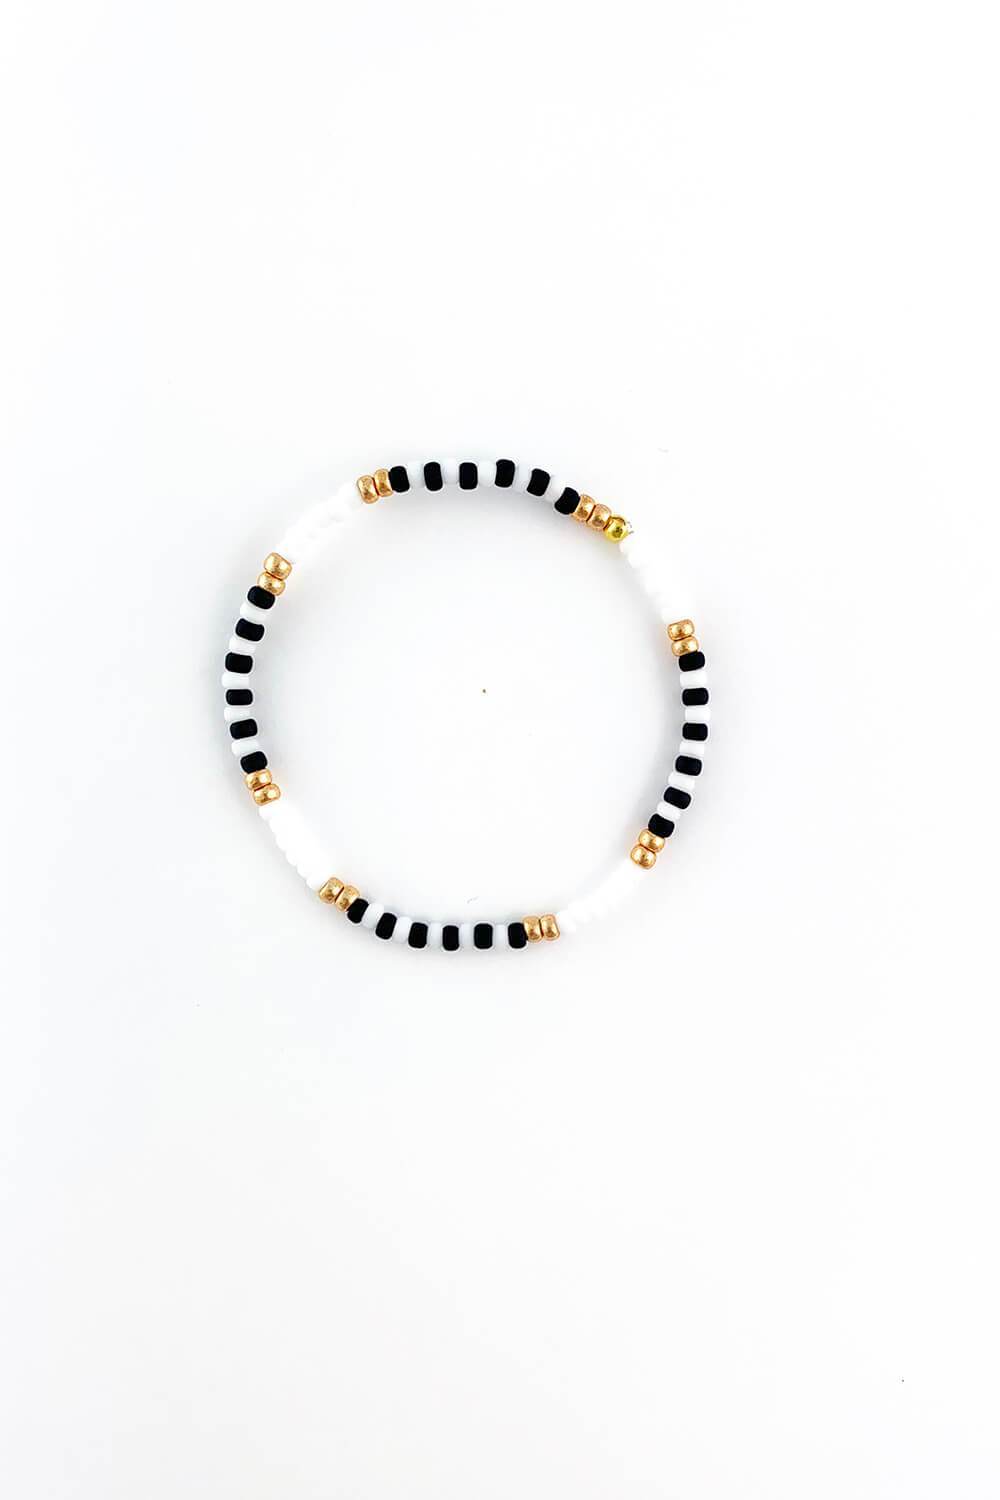 NYC Limited Edition Stackable Bracelets - Sarah Marie Design Studio